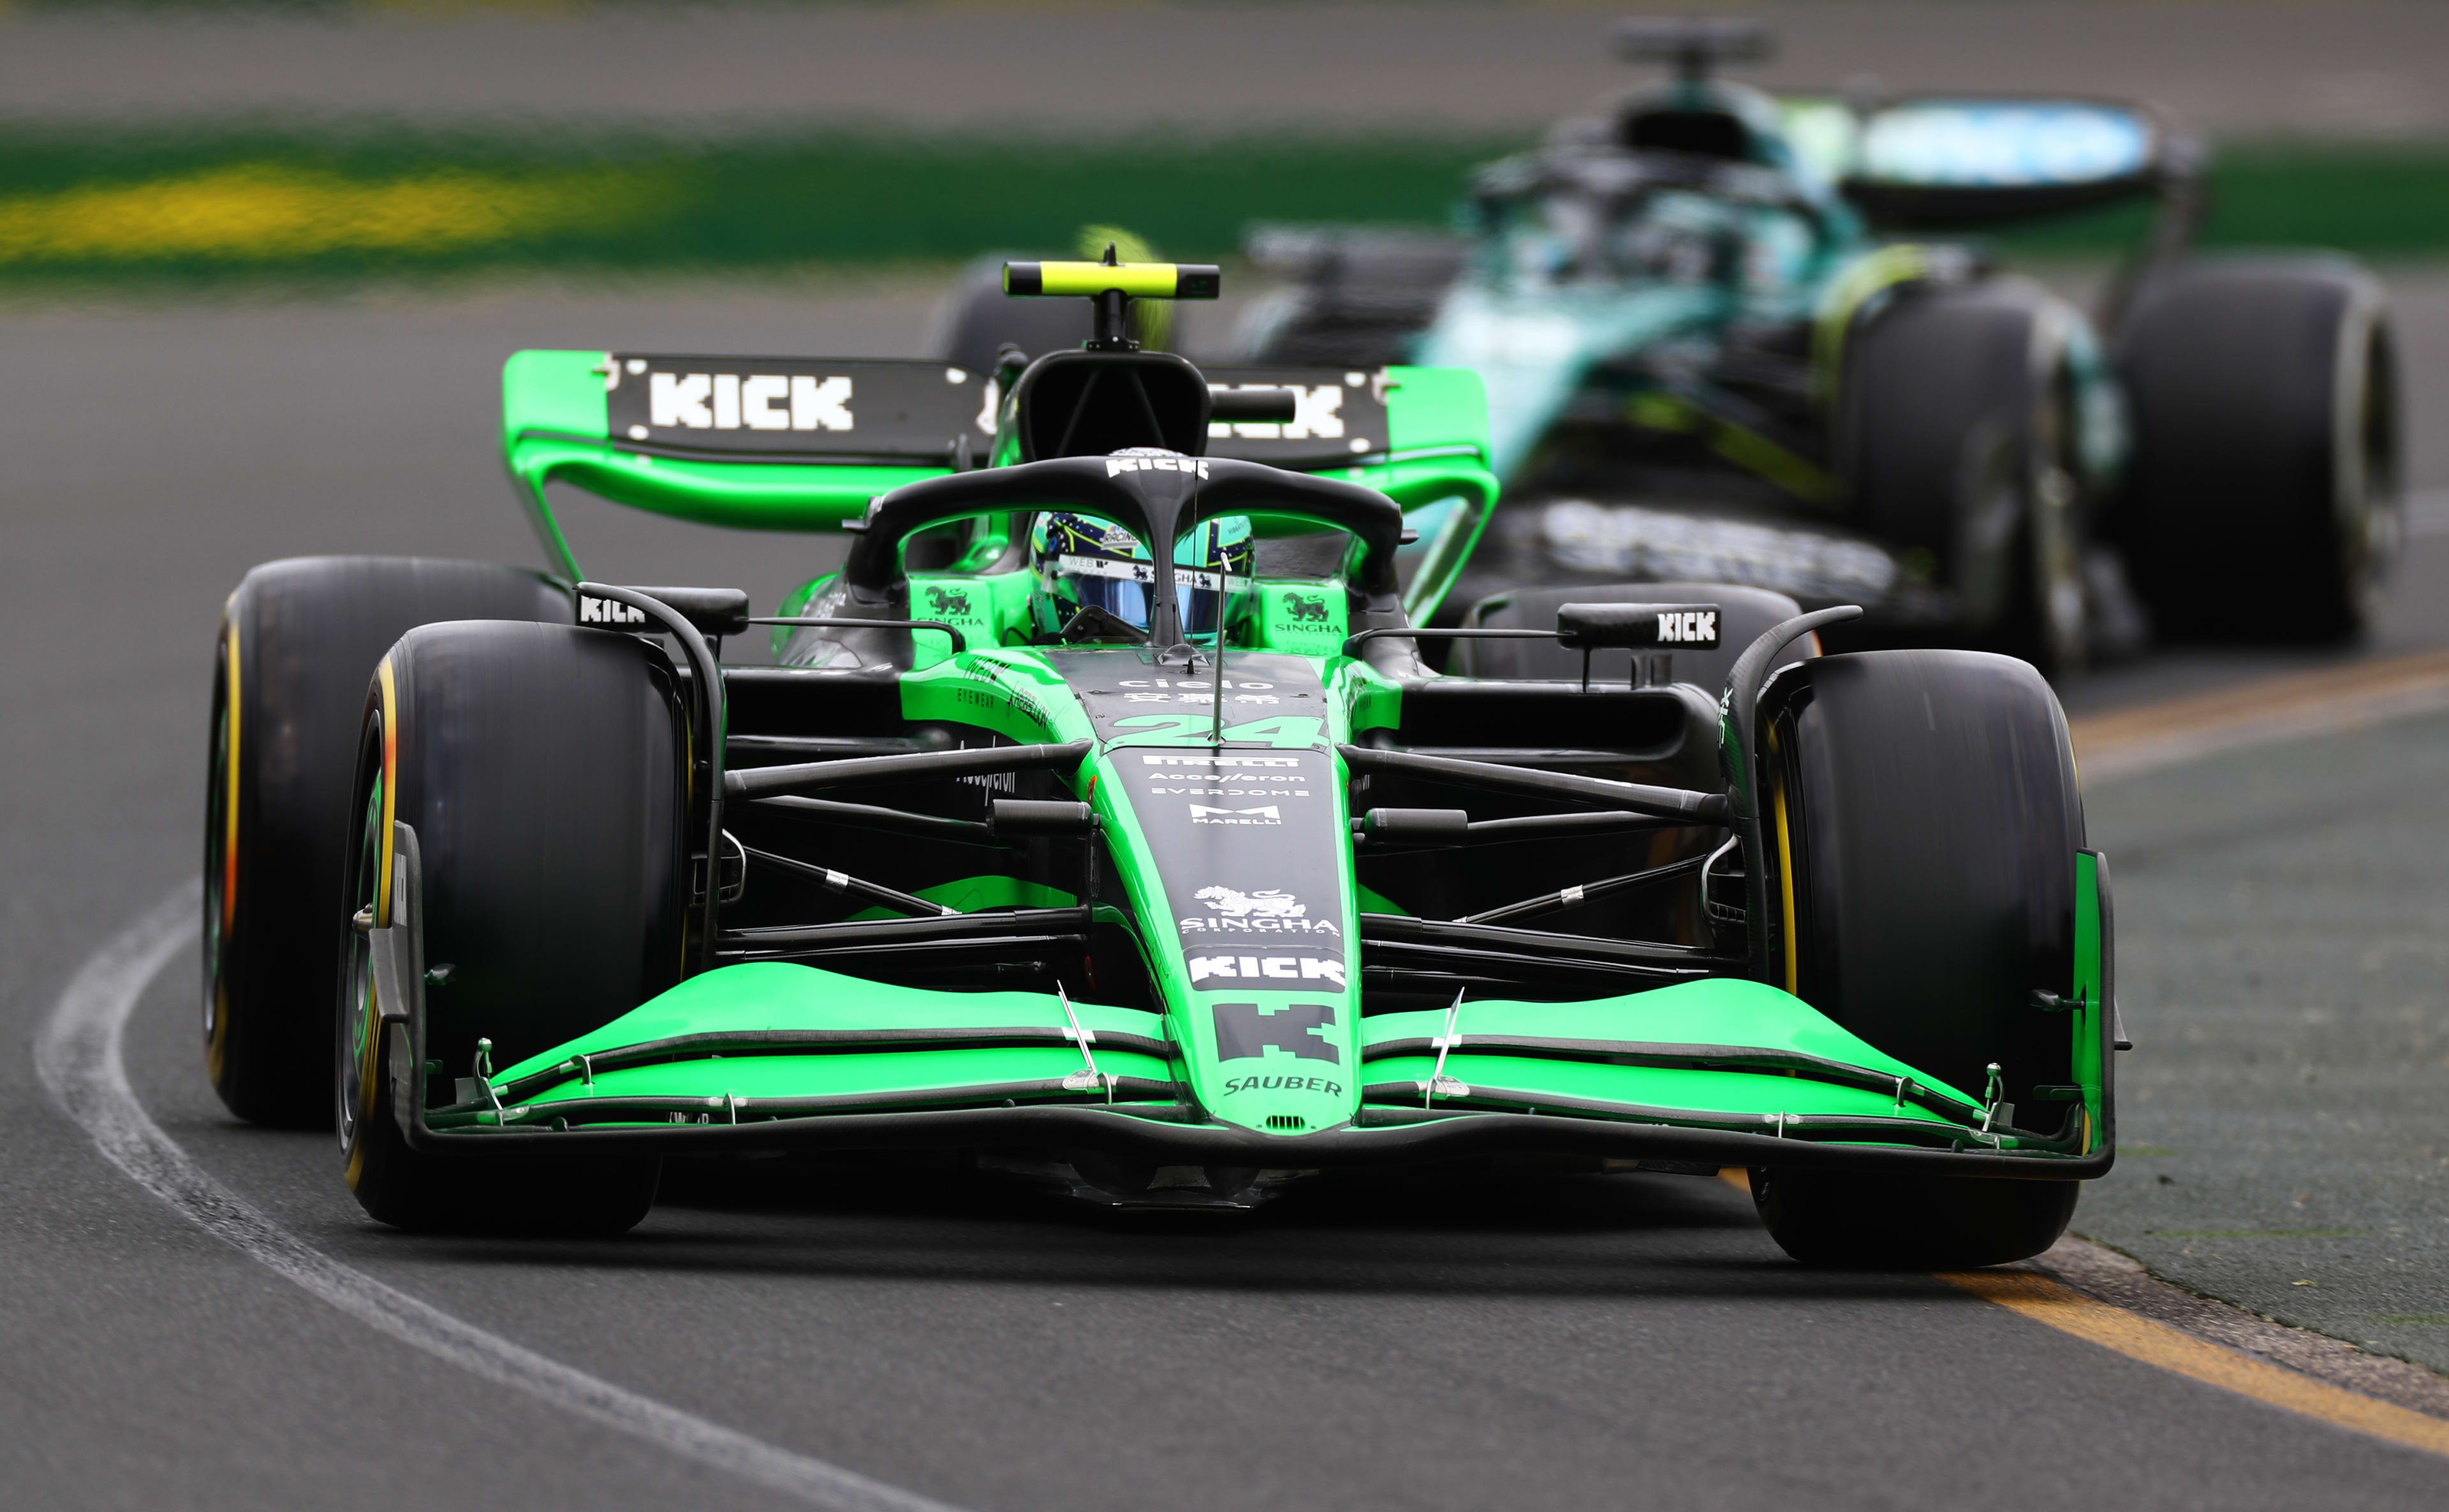 2019 FIA Formula One Heineken Grande Prêmio do Brasil – Race – Sunday, Alfa Romeo